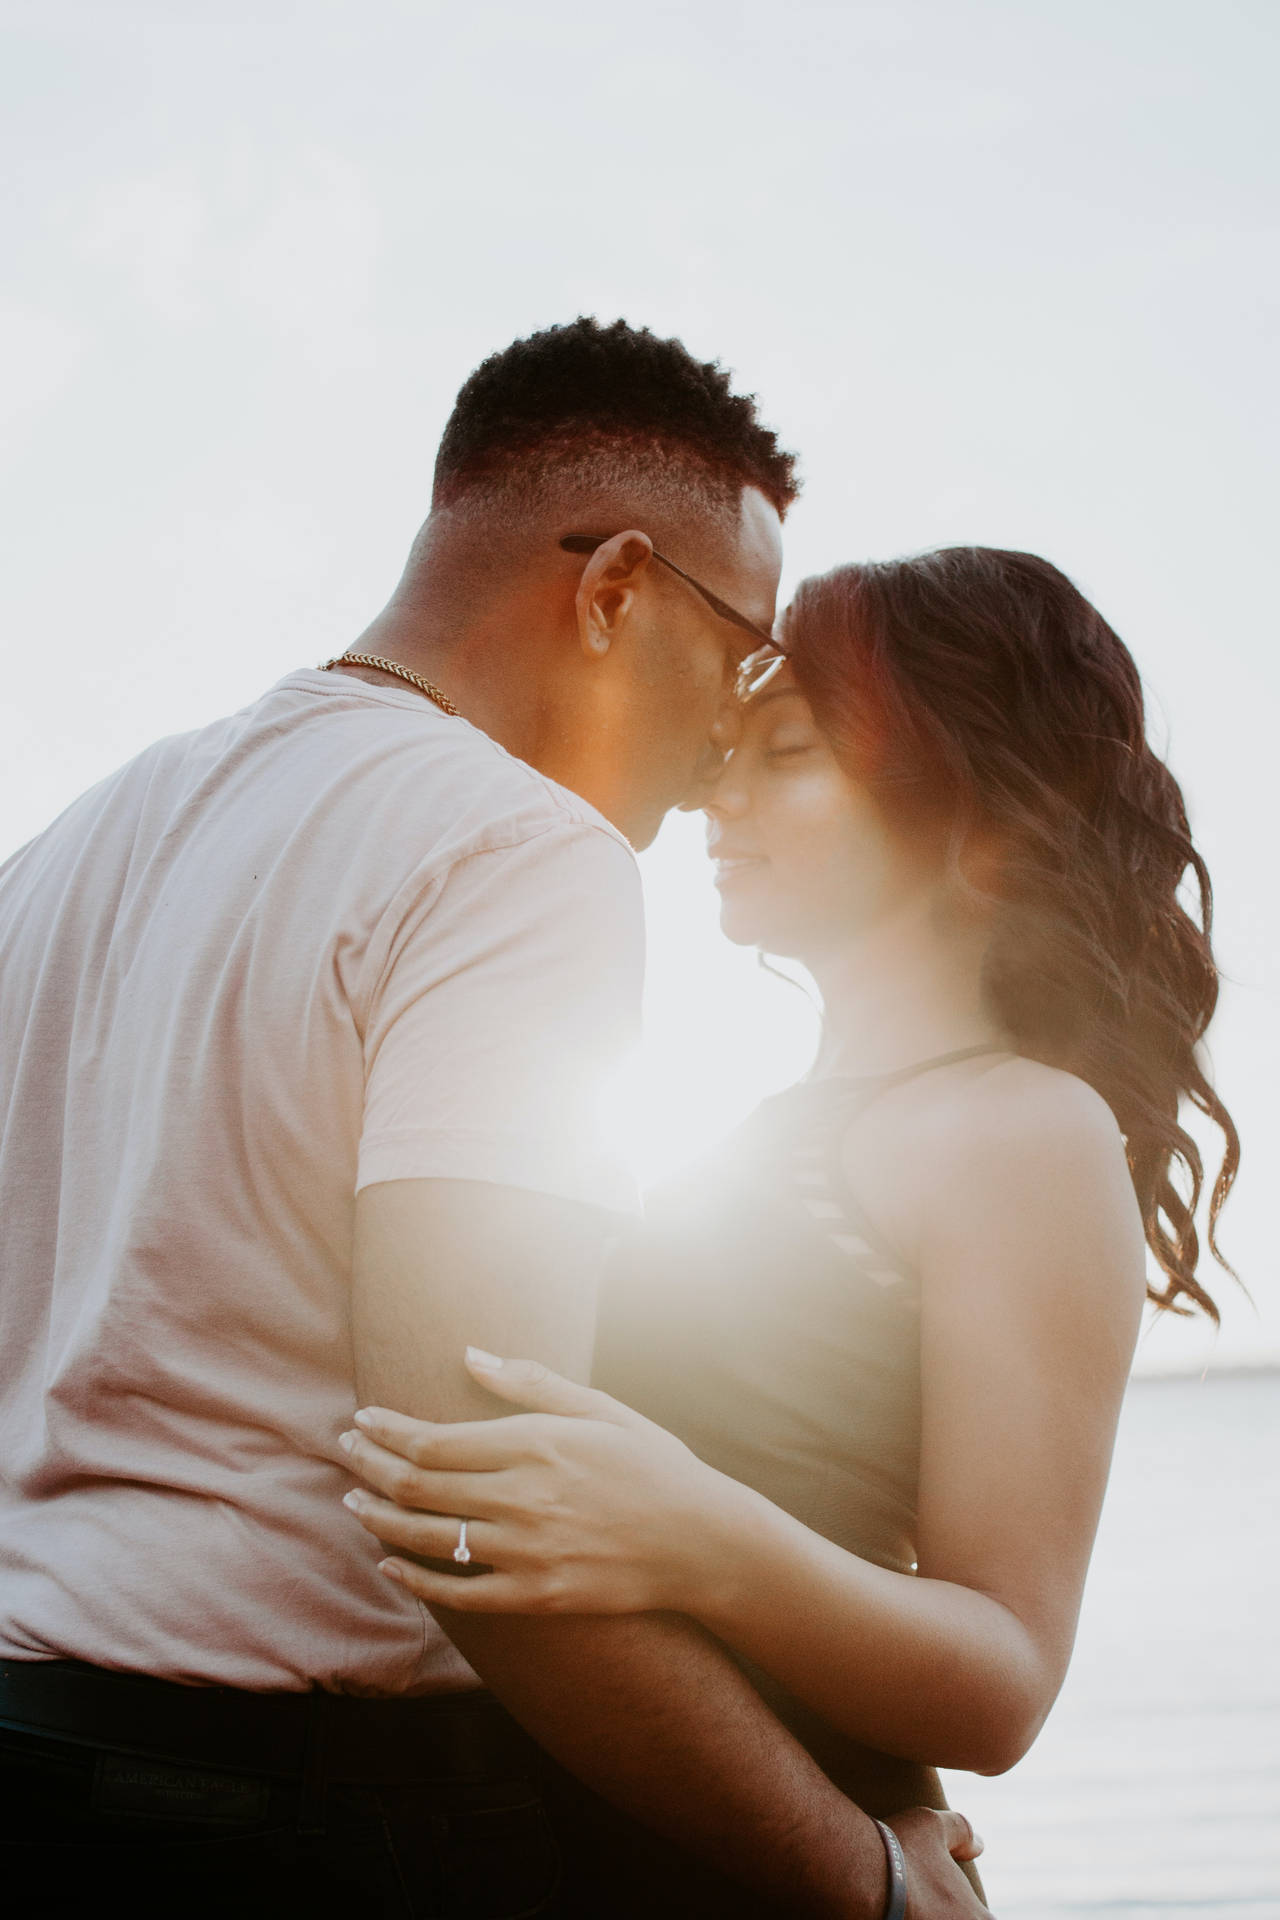 Download Romantic Couple Intimate Sunlight Kiss Wallpaper 